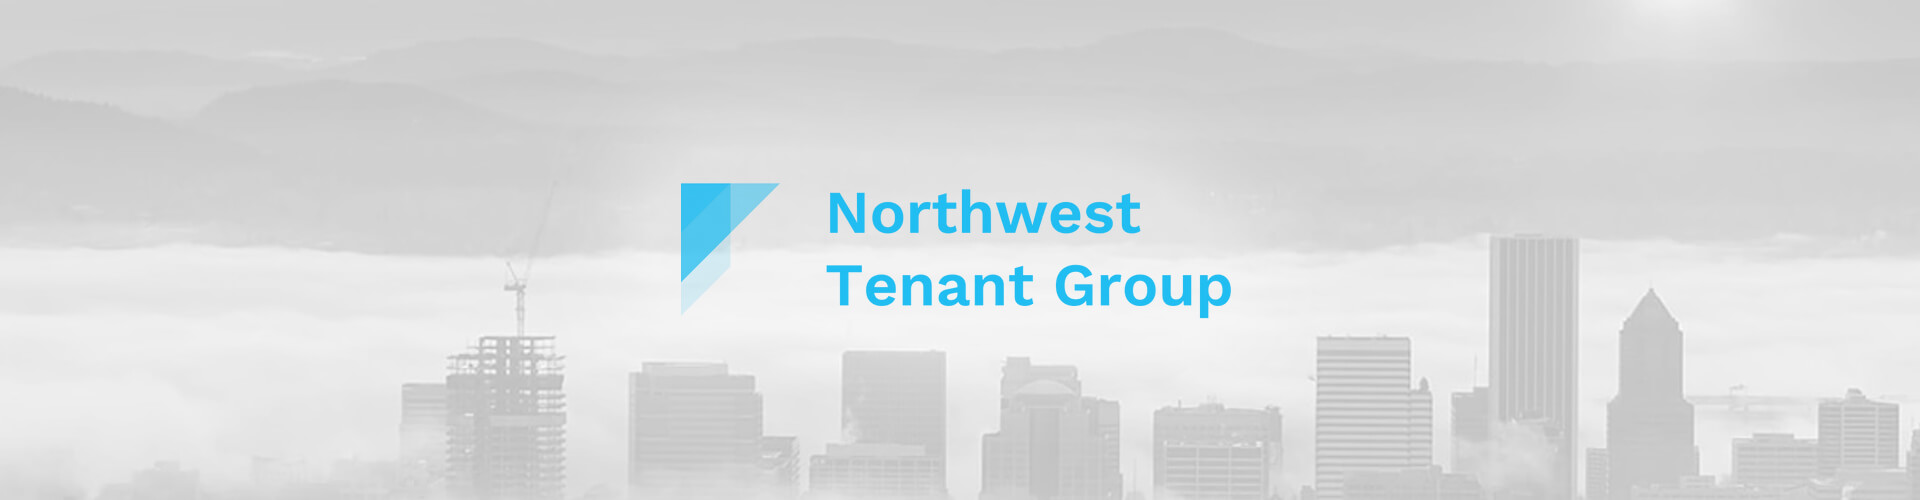 Northwest Tenant Group banner